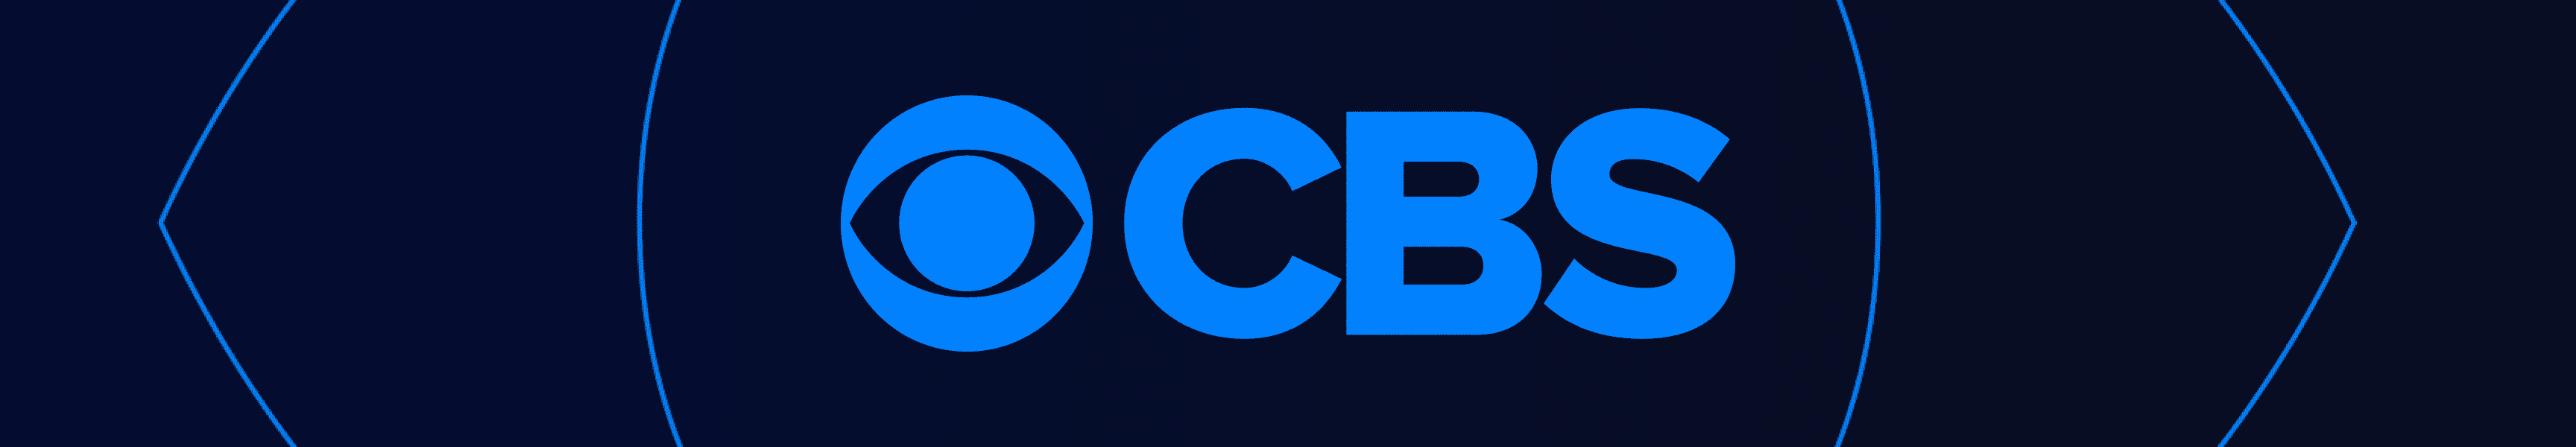 CBS Entertainment As Seen On